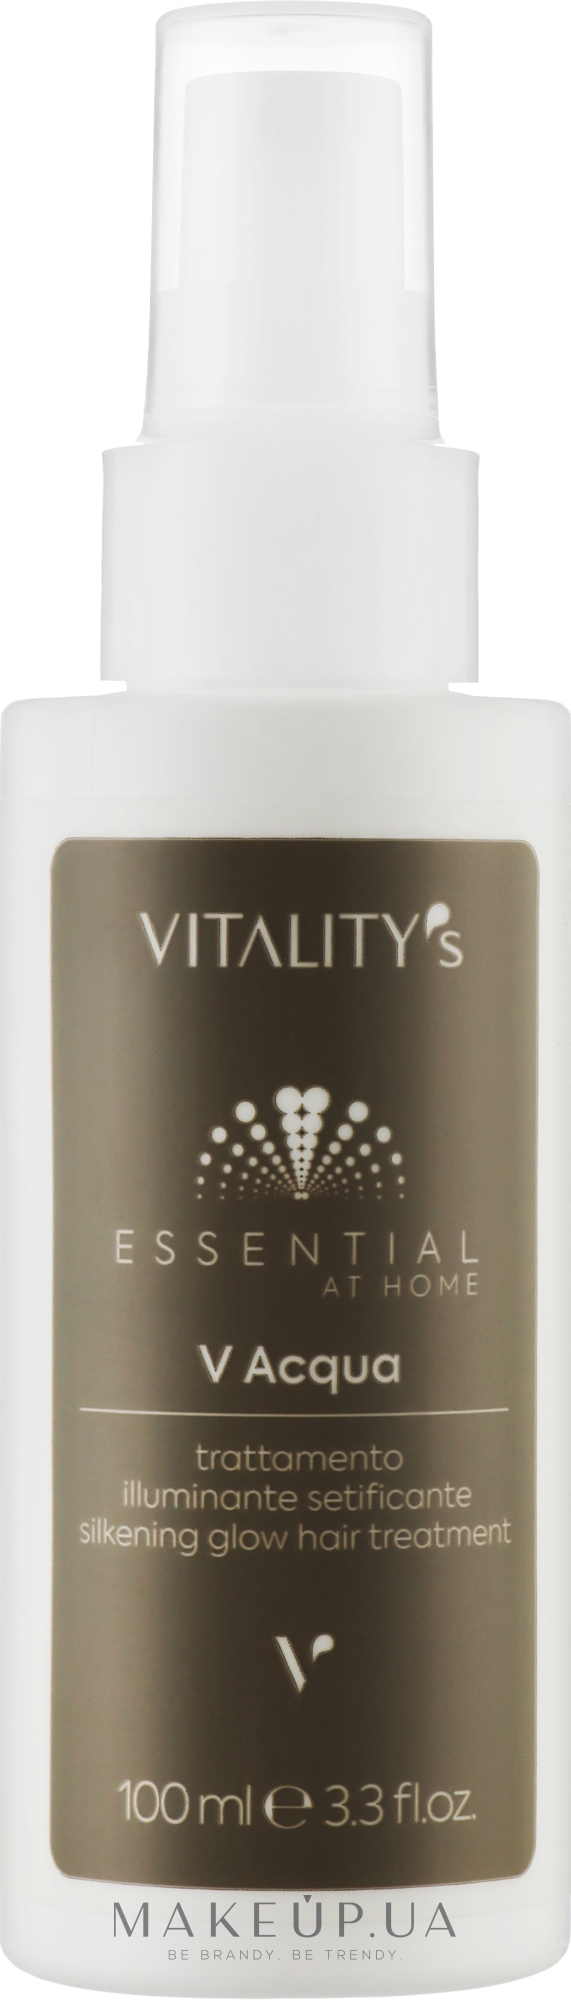 Экспресс-увлажнение и восстановление волос - Vitality's Essential V Acqua — фото 100ml